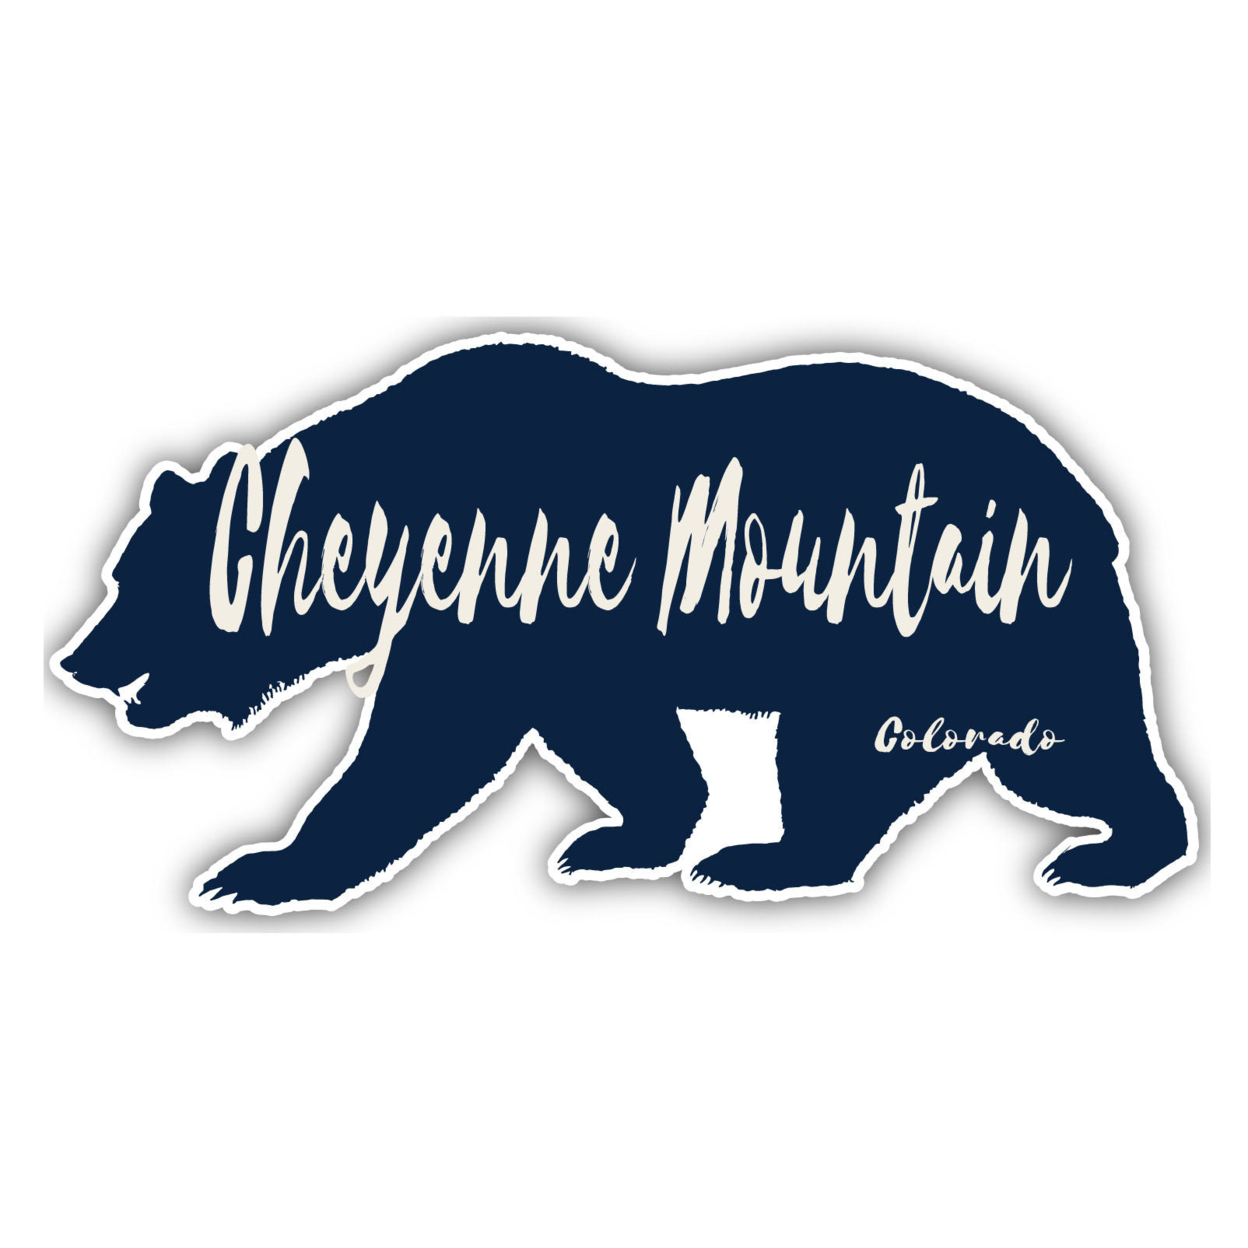 Cheyenne Mountain Colorado Souvenir Decorative Stickers (Choose Theme And Size) - 4-Pack, 8-Inch, Bear